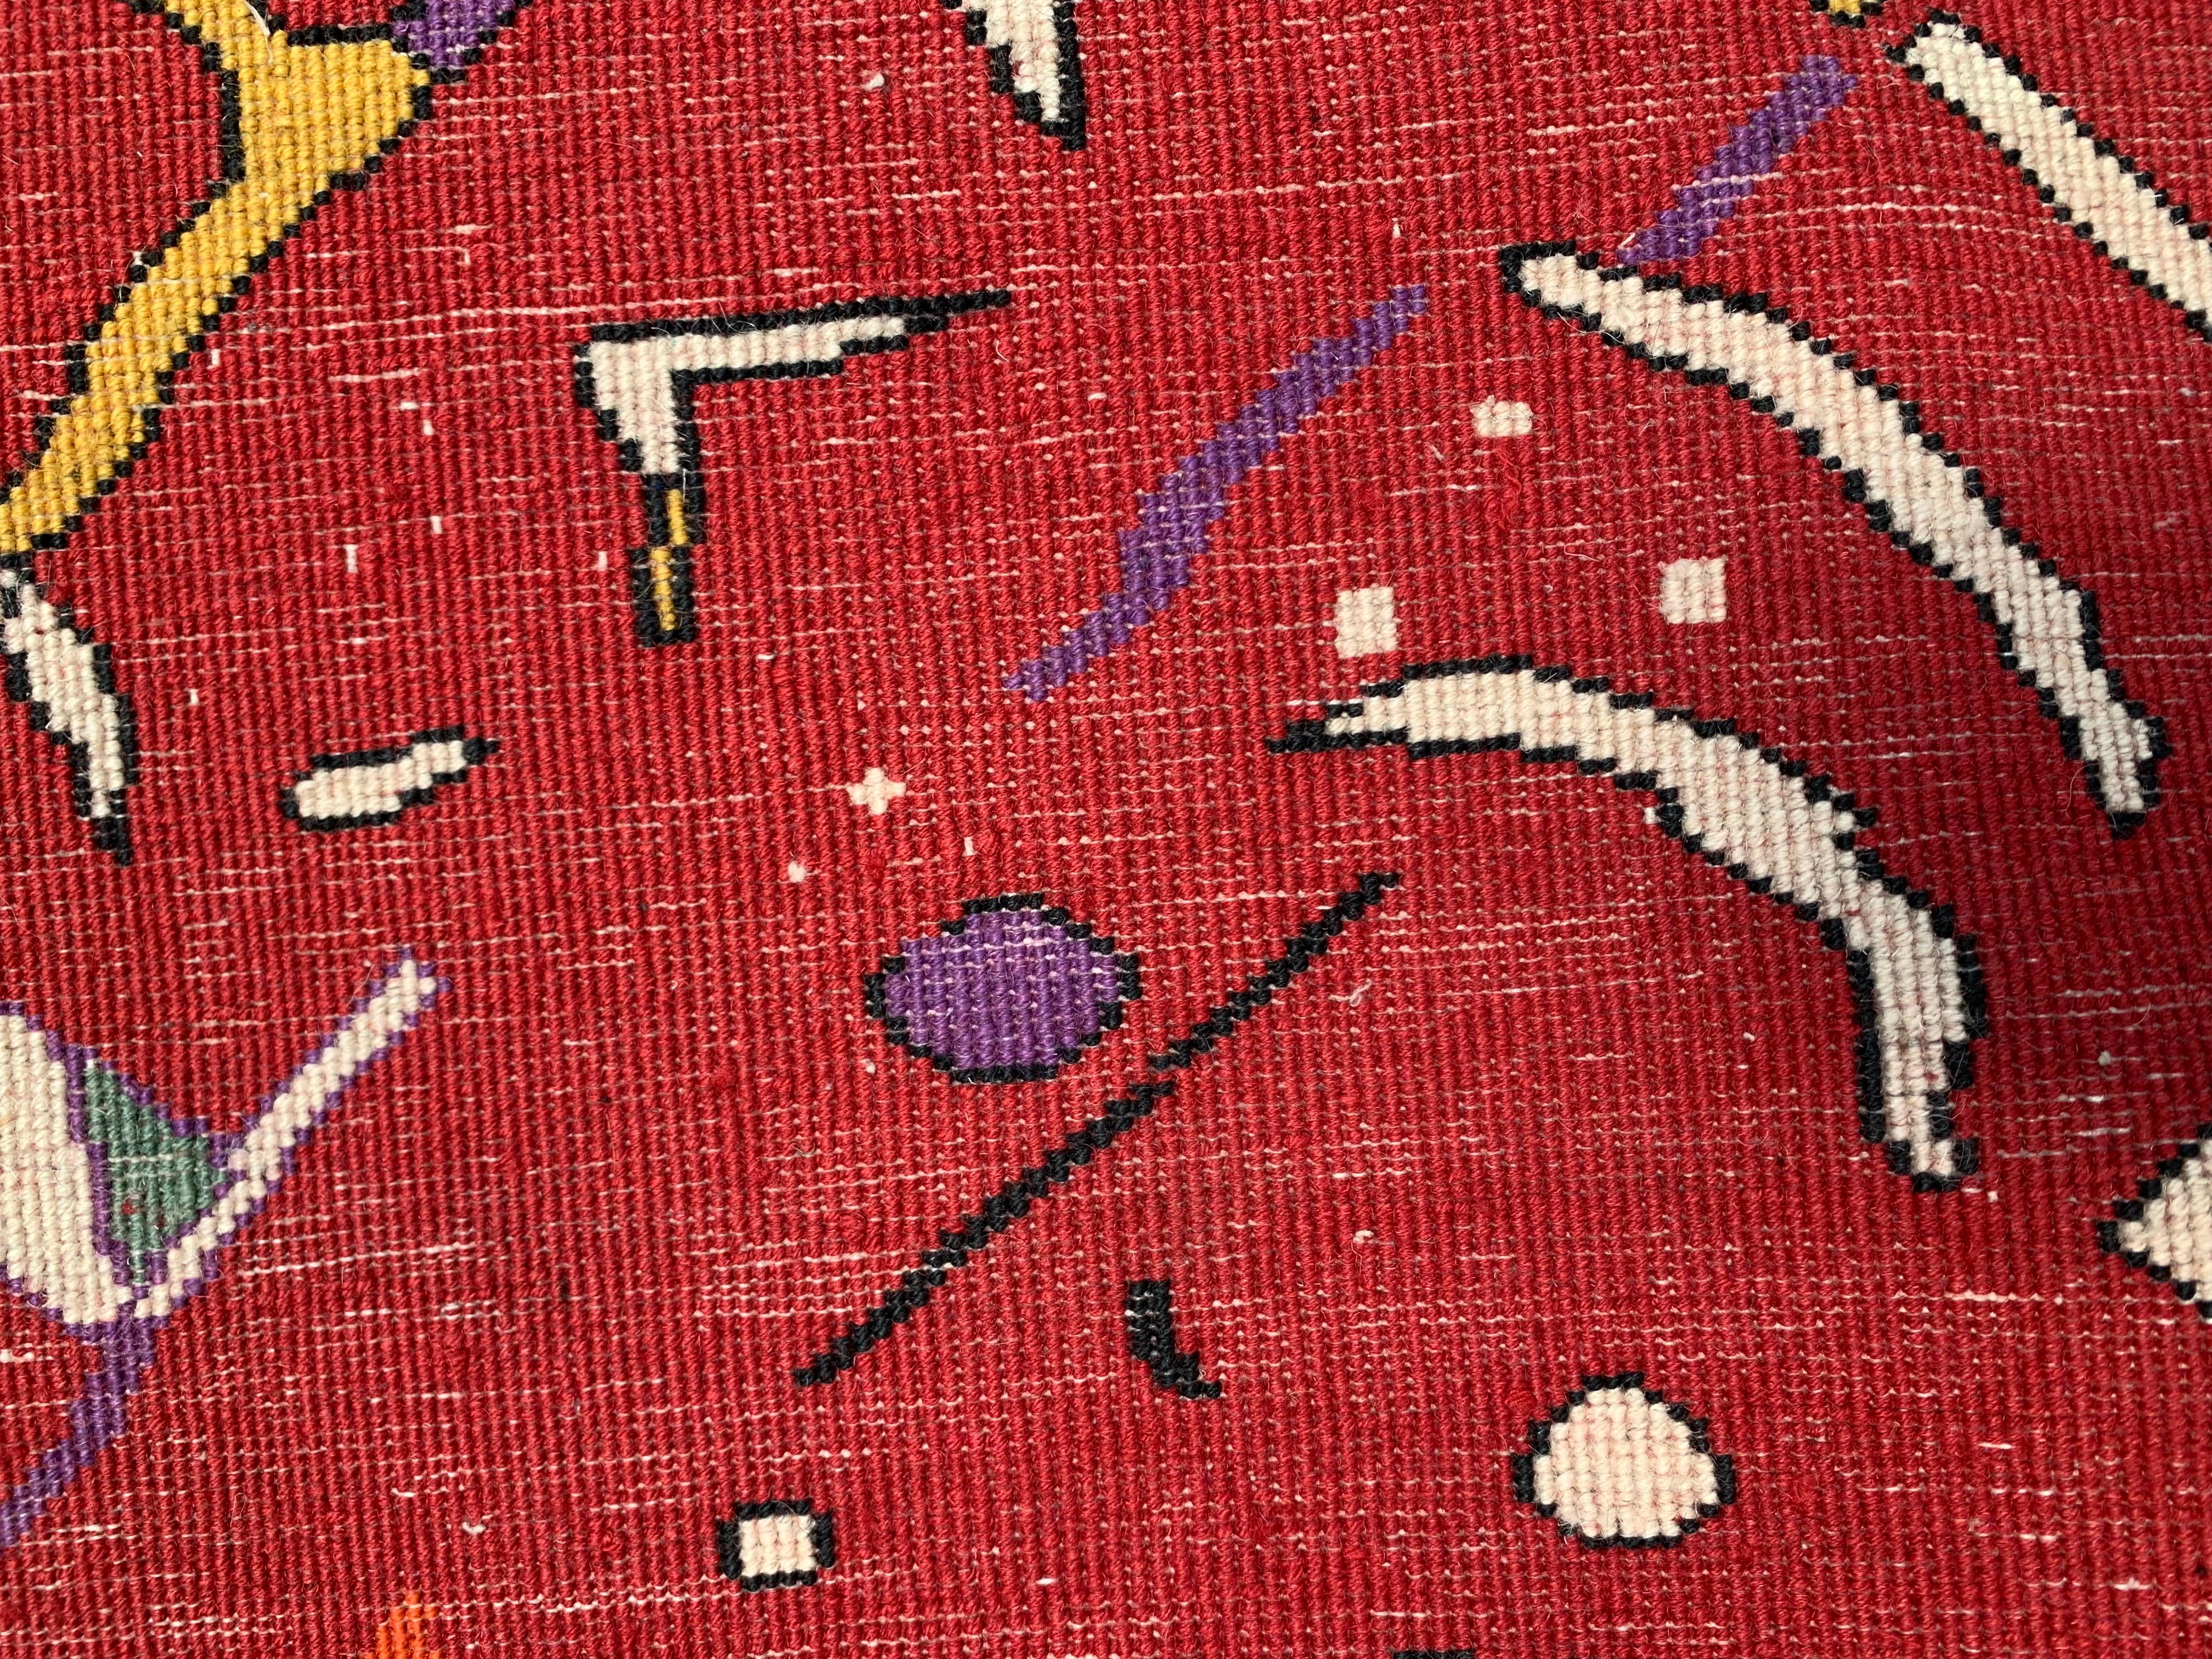 Contemporary Carpet after Vassily Kandinsky